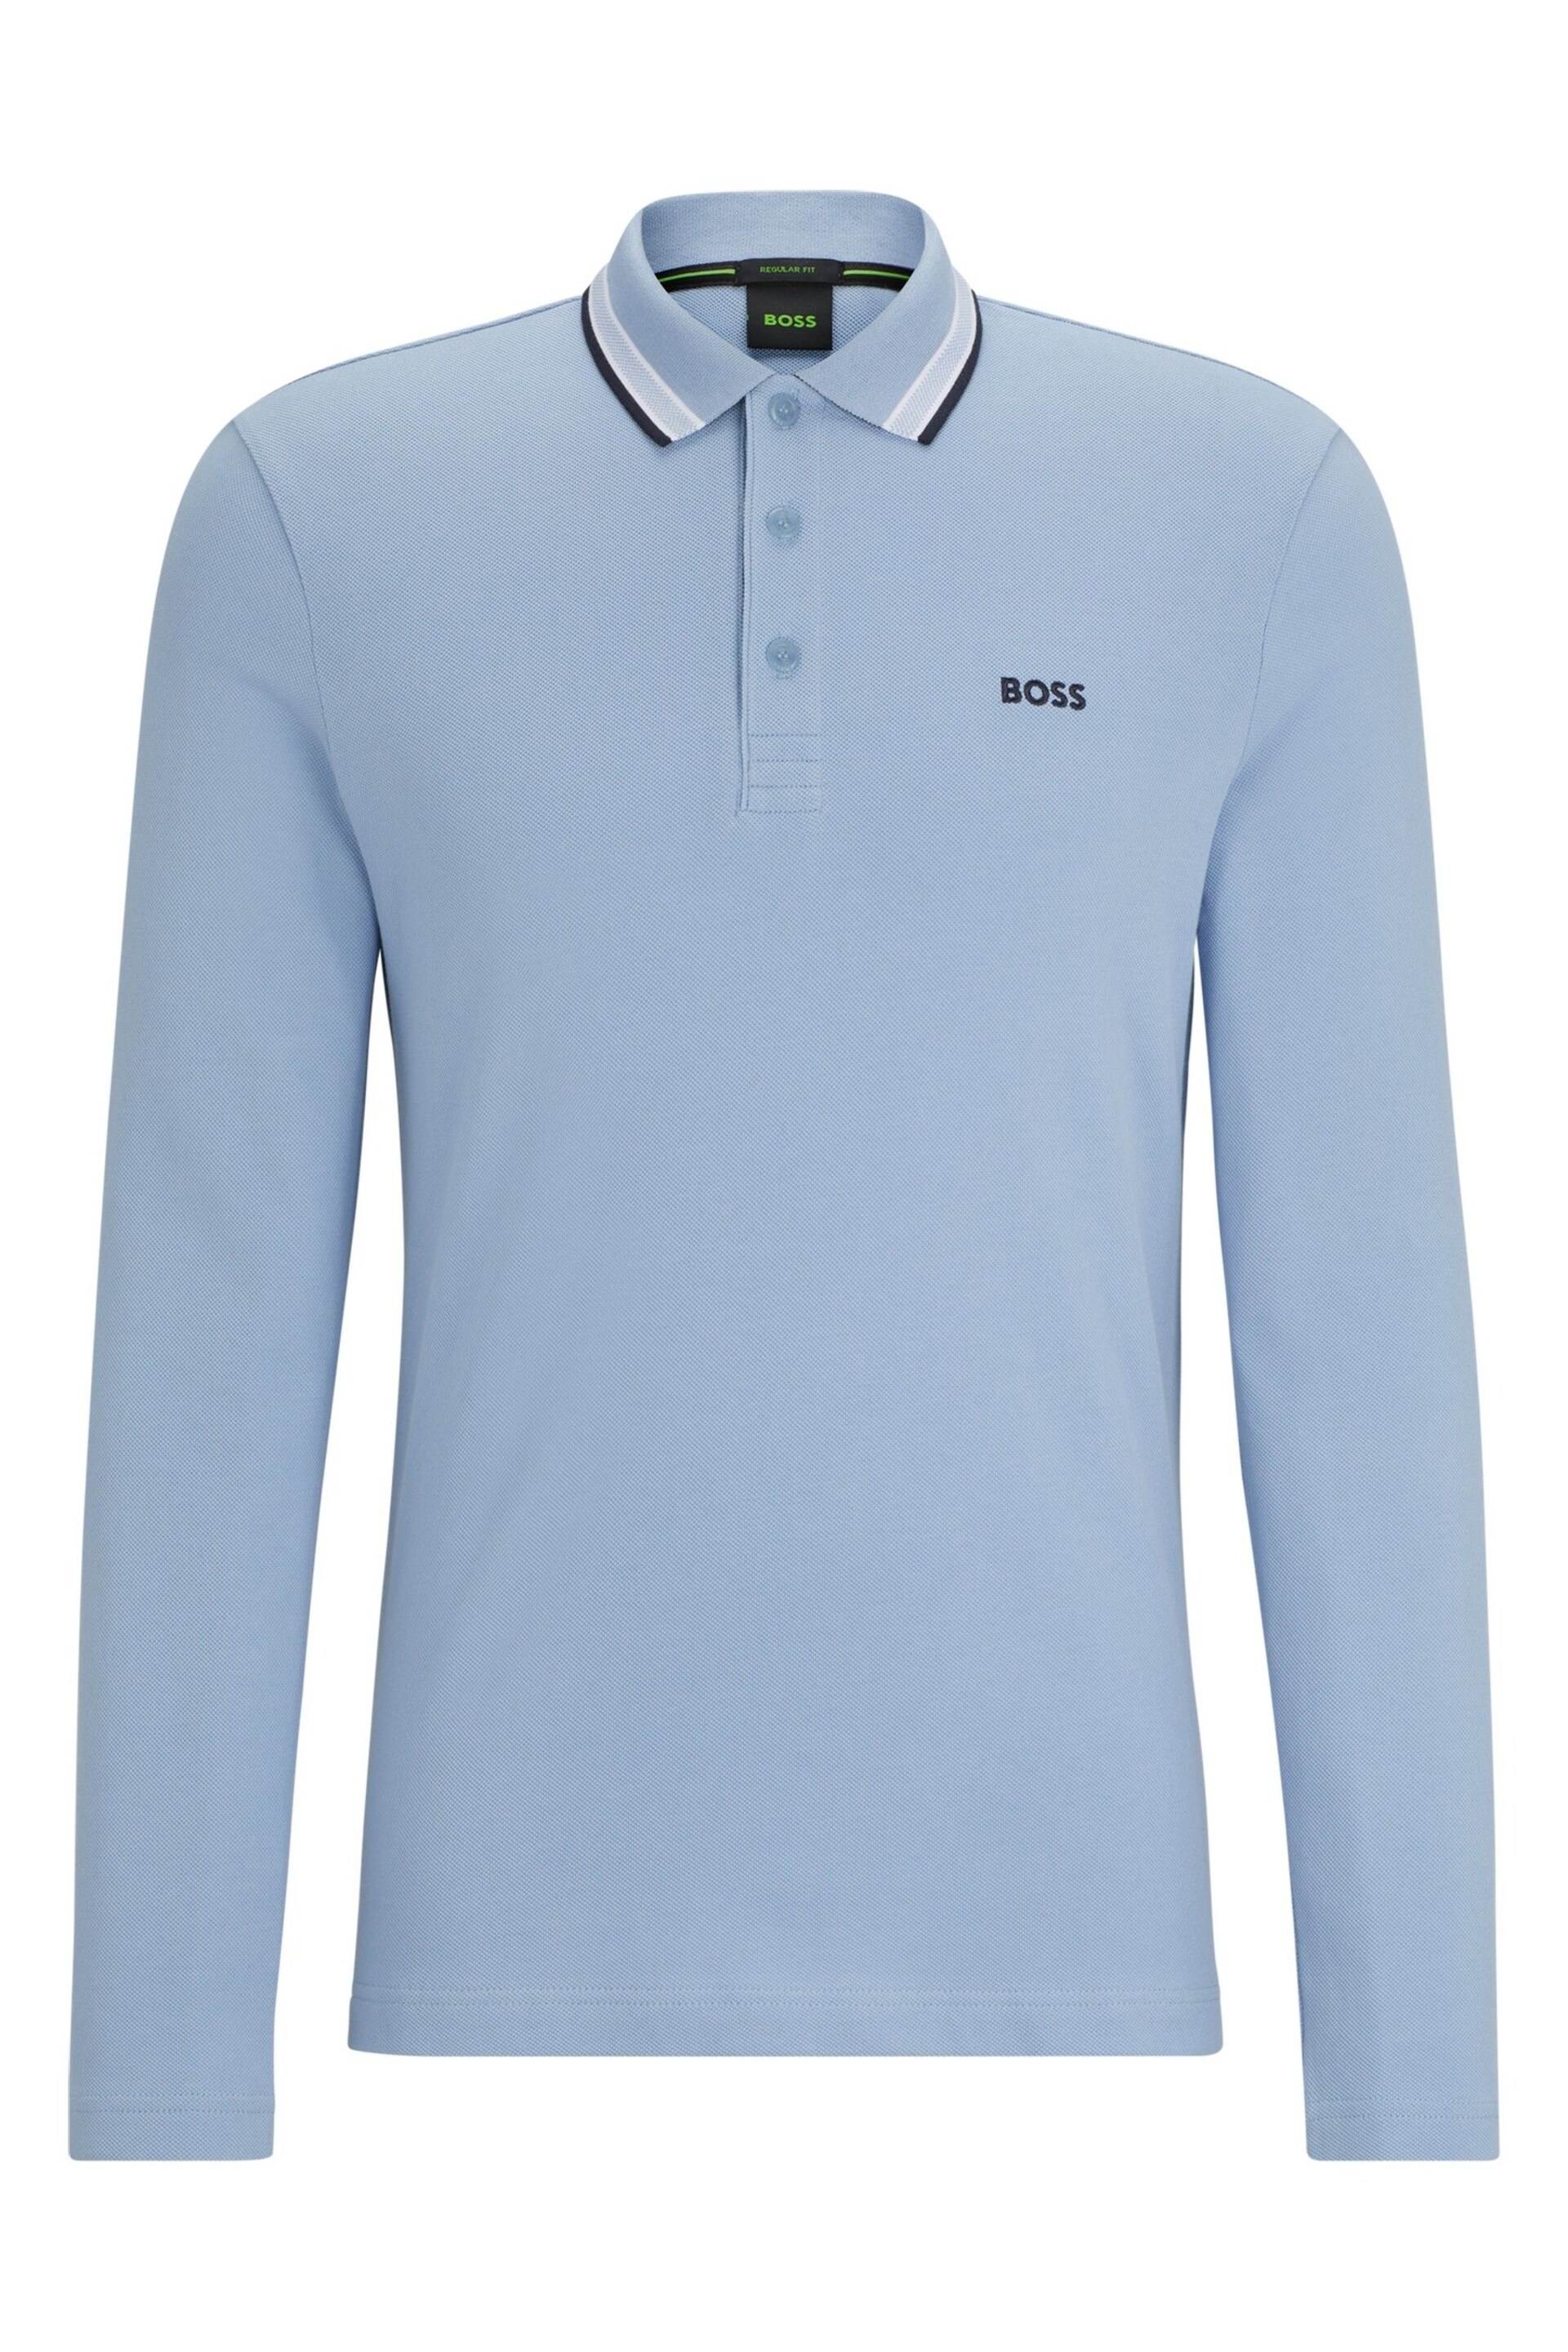 BOSS Light Blue Plisy Collar Detail Long Sleeve Polo Shirt - Image 5 of 5